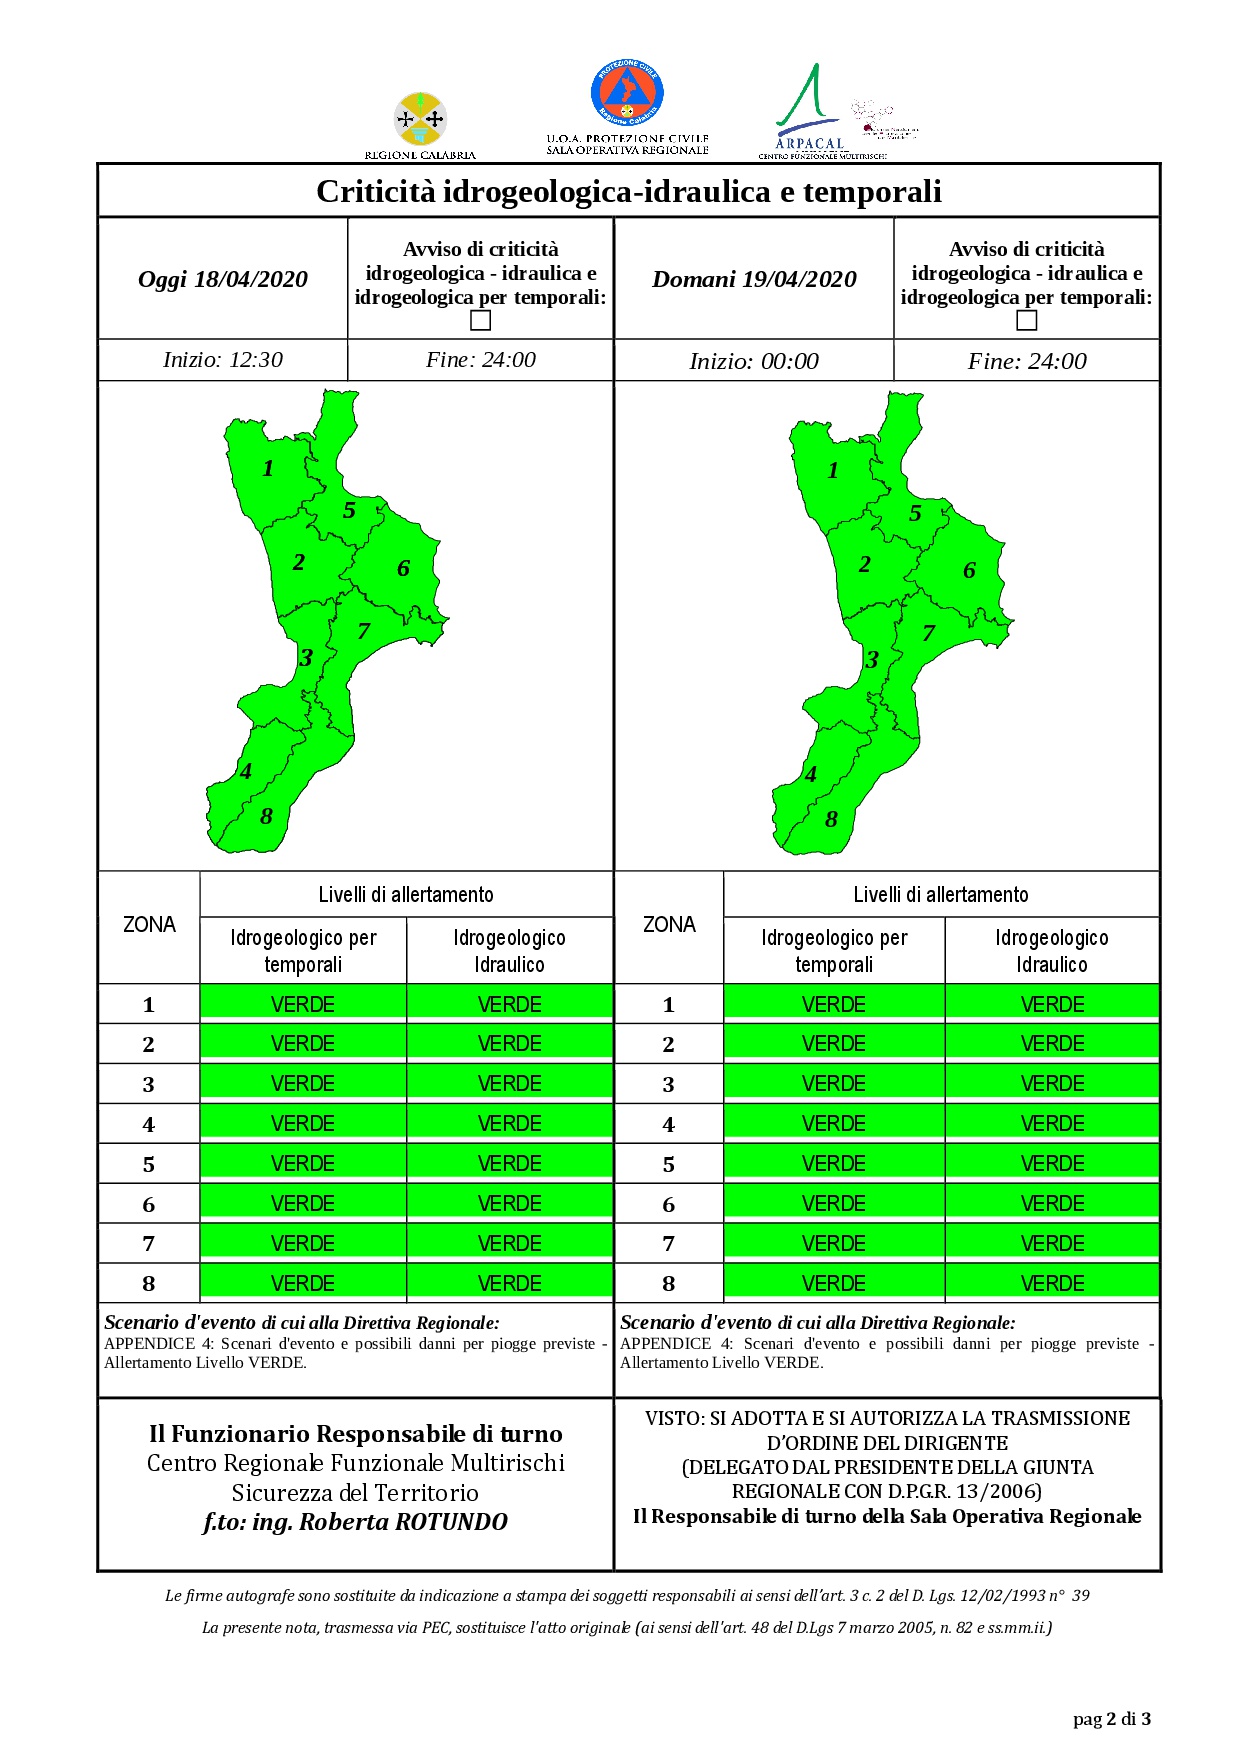 Criticità idrogeologica-idraulica e temporali in Calabria 18-04-2020